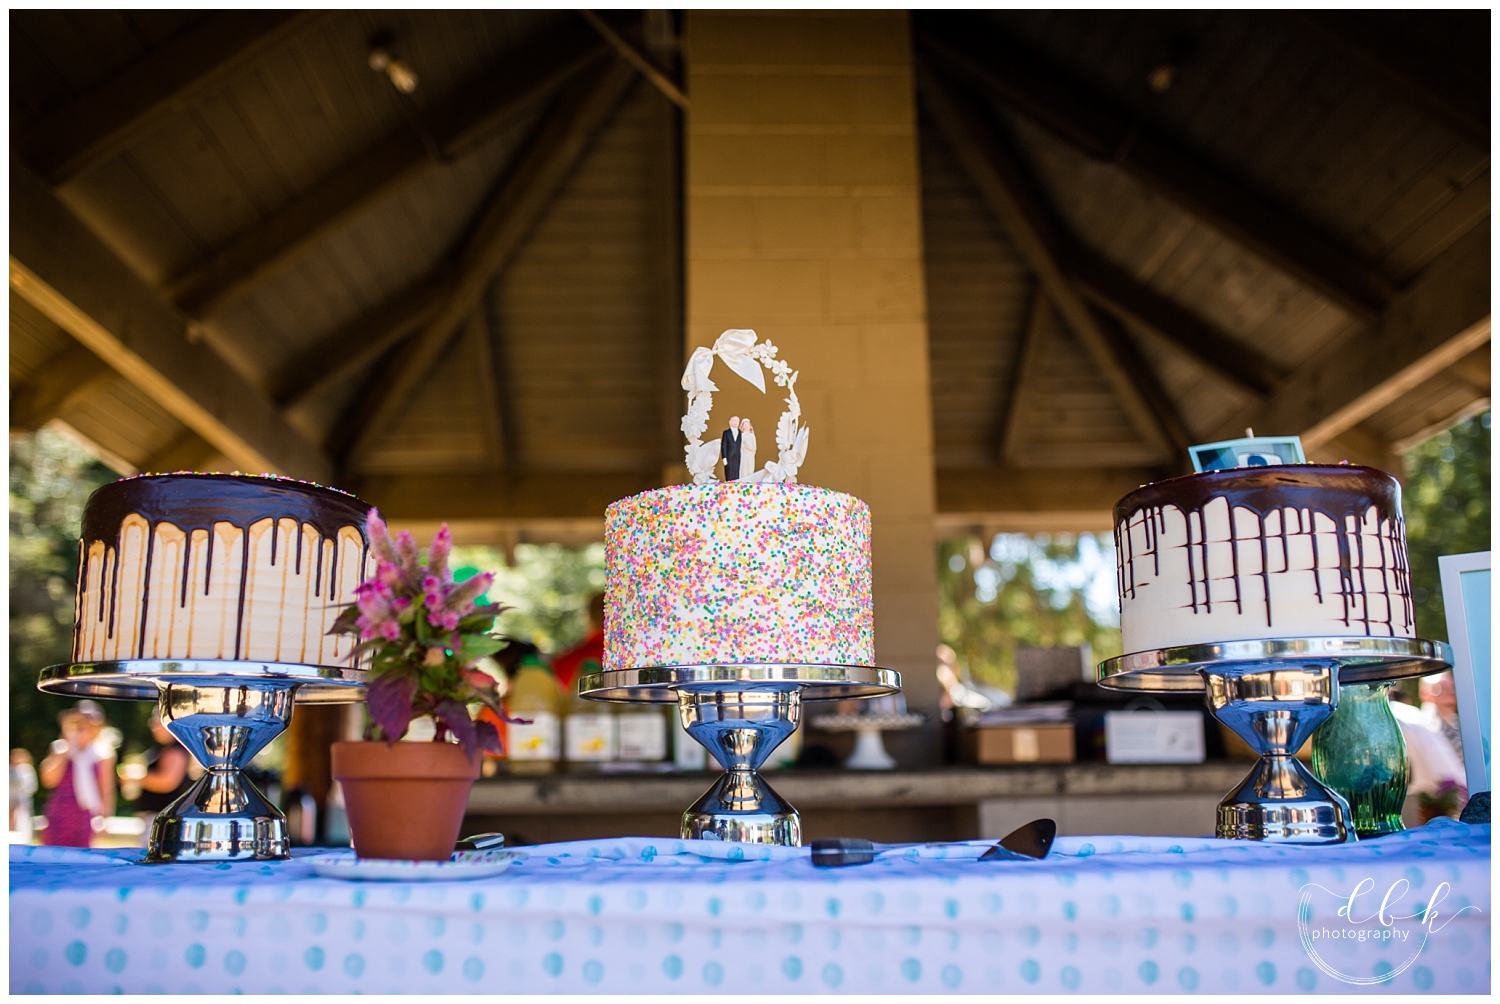 three wedding cakes at picnic area of Washington Park in Anacortes